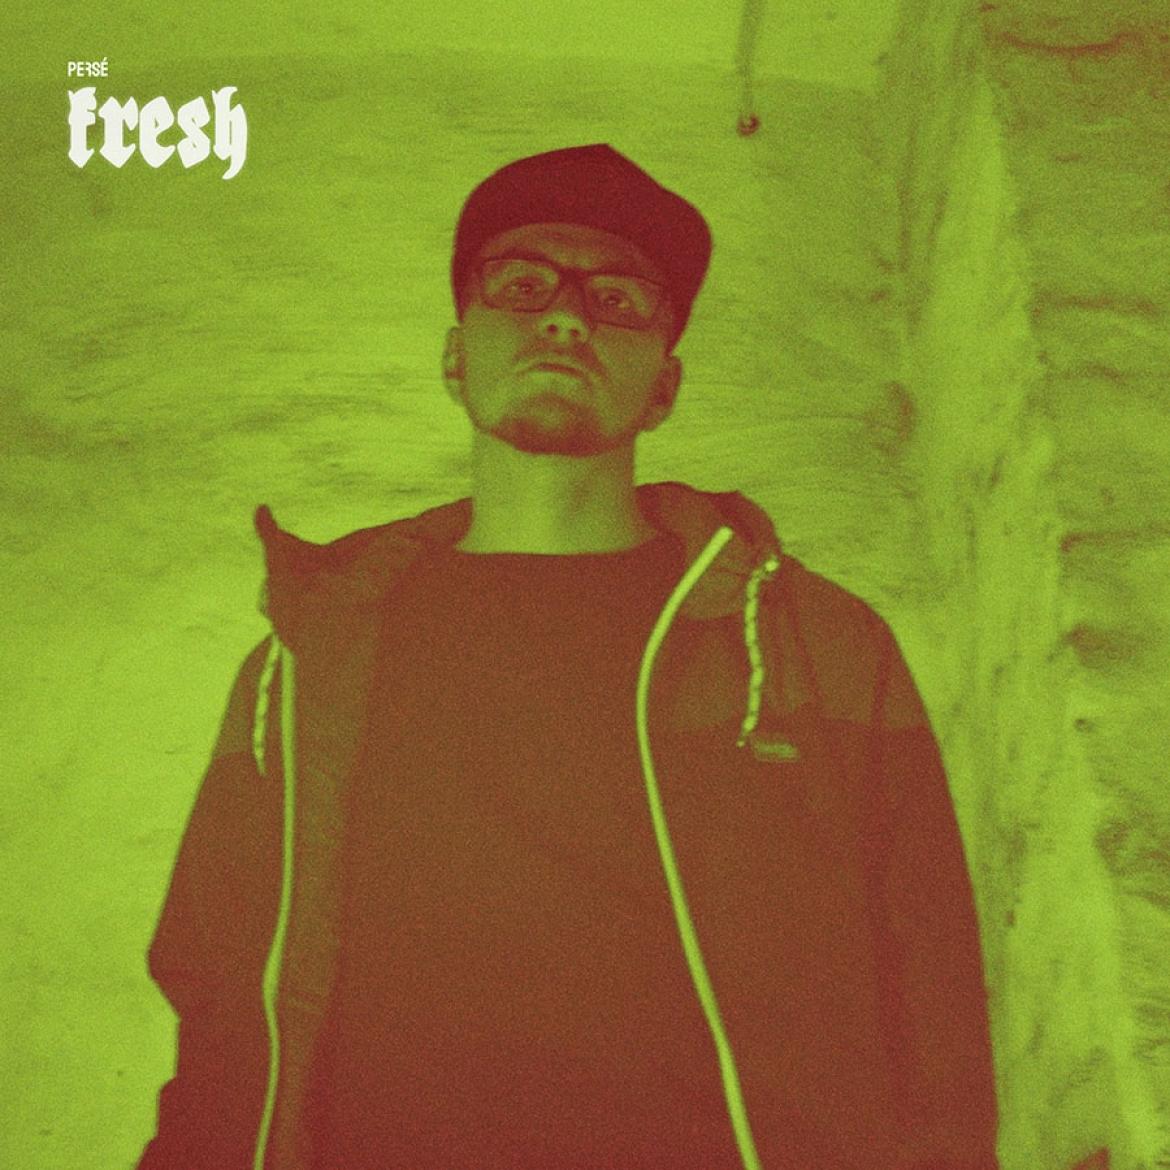 Persé Fresh Cover